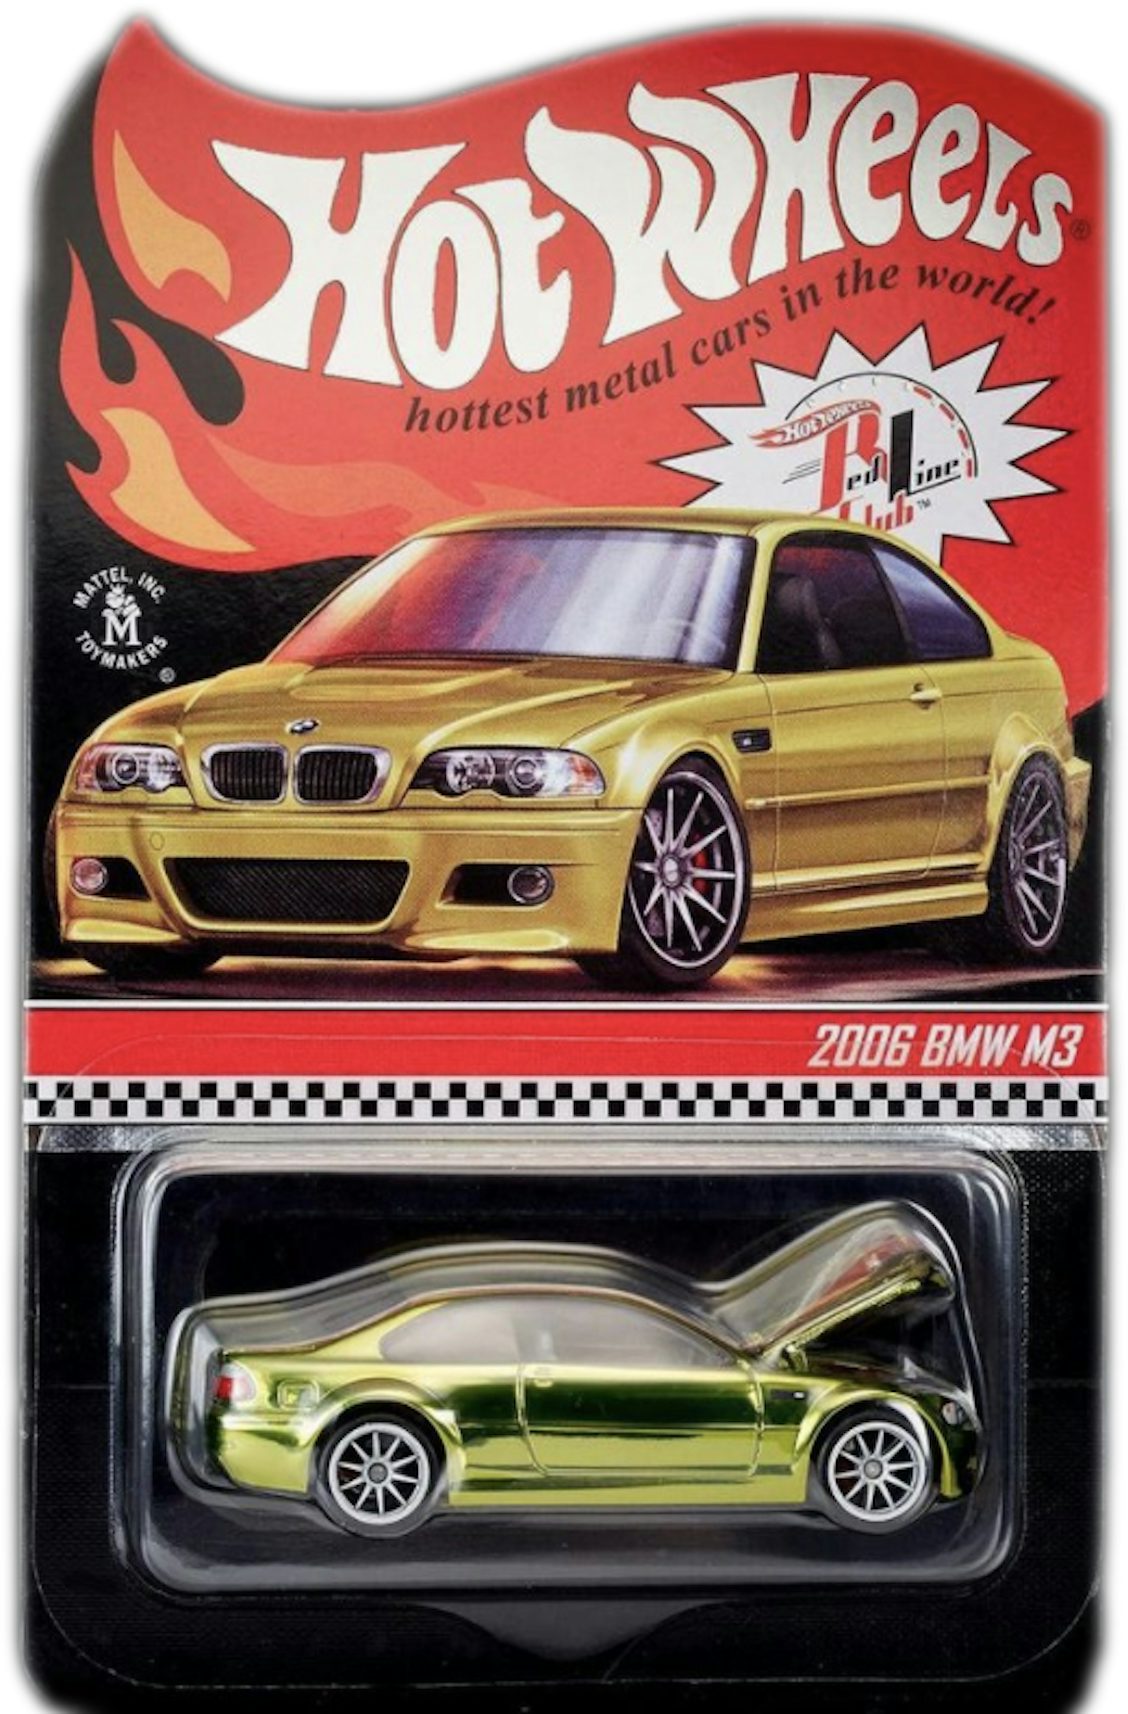 https://images.stockx.com/images/Hot-Wheels-BMW-M3-E46-Phoenix-Yellow-Metallic.jpg?fit=fill&bg=FFFFFF&w=1200&h=857&fm=jpg&auto=compress&dpr=2&trim=color&updated_at=1608102950&q=60